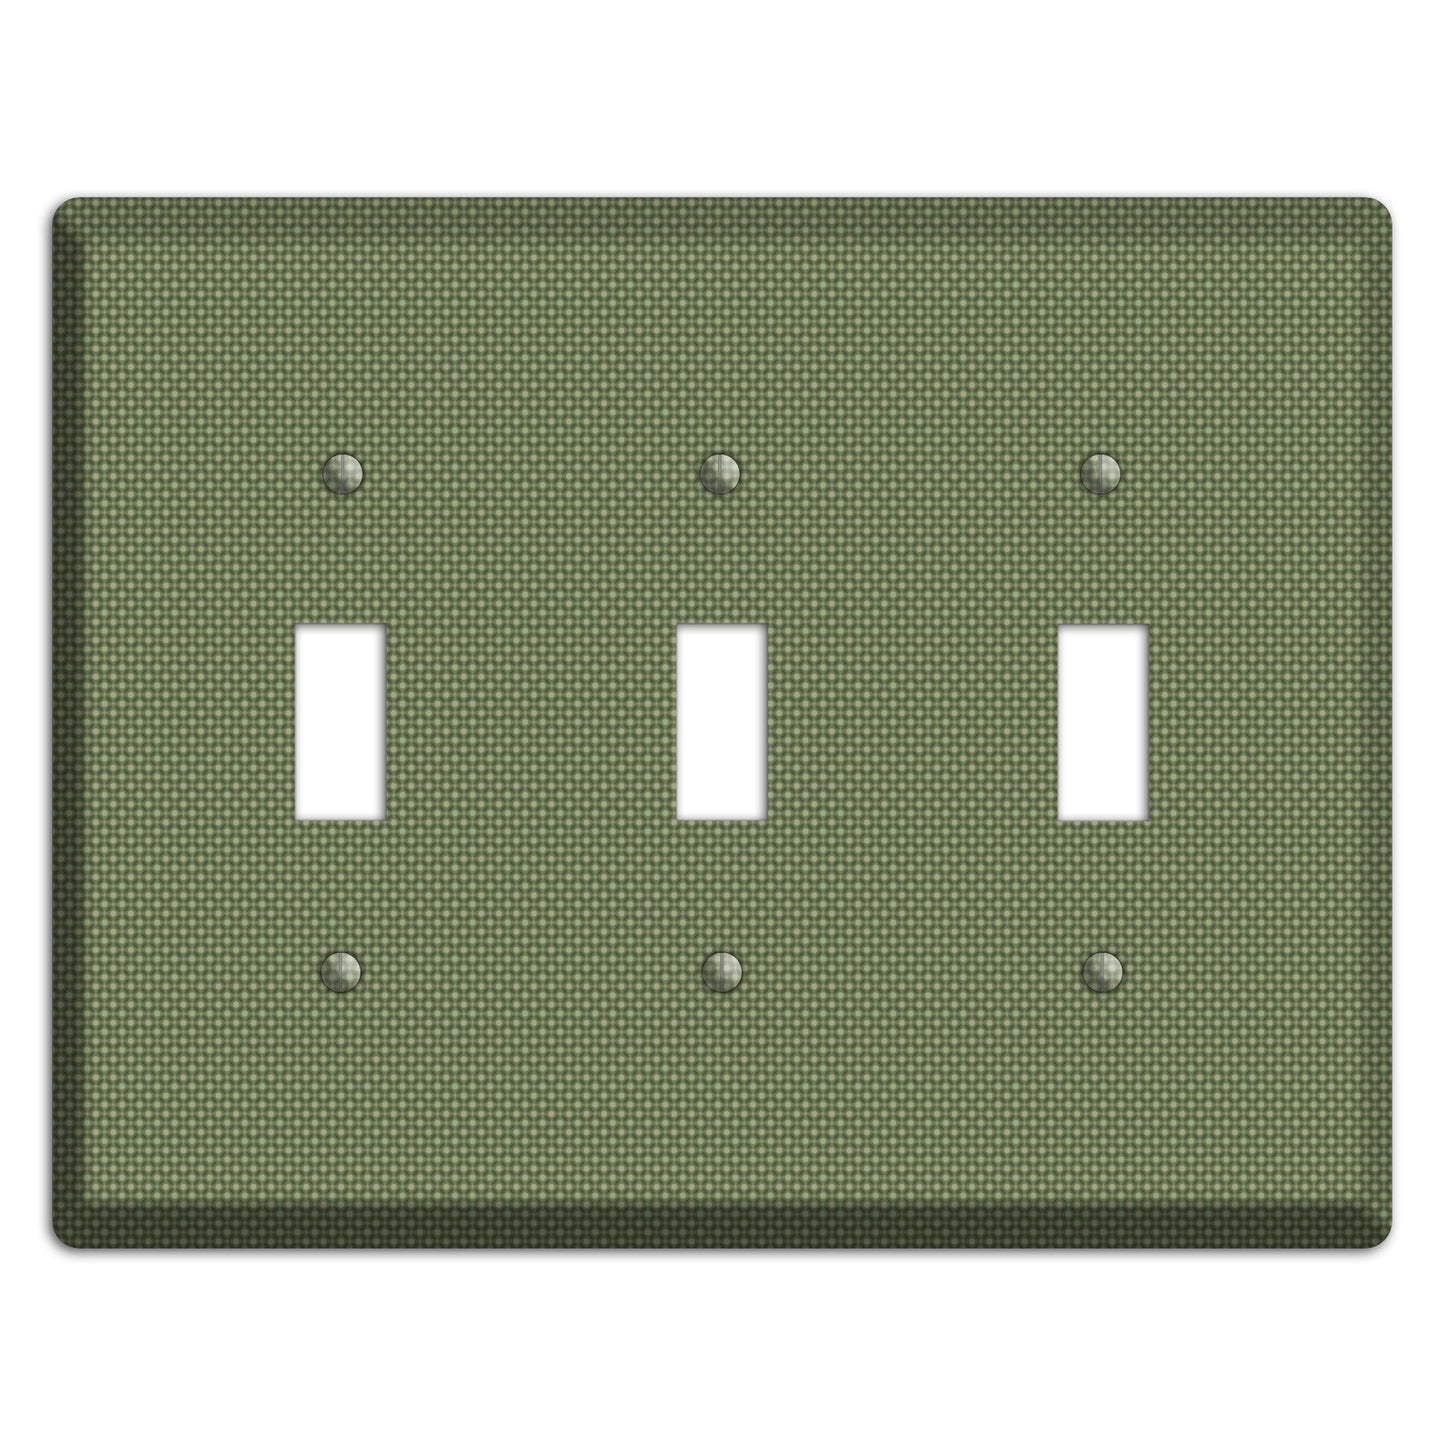 Multi Green Tiny Checkered Circles 3 Toggle Wallplate